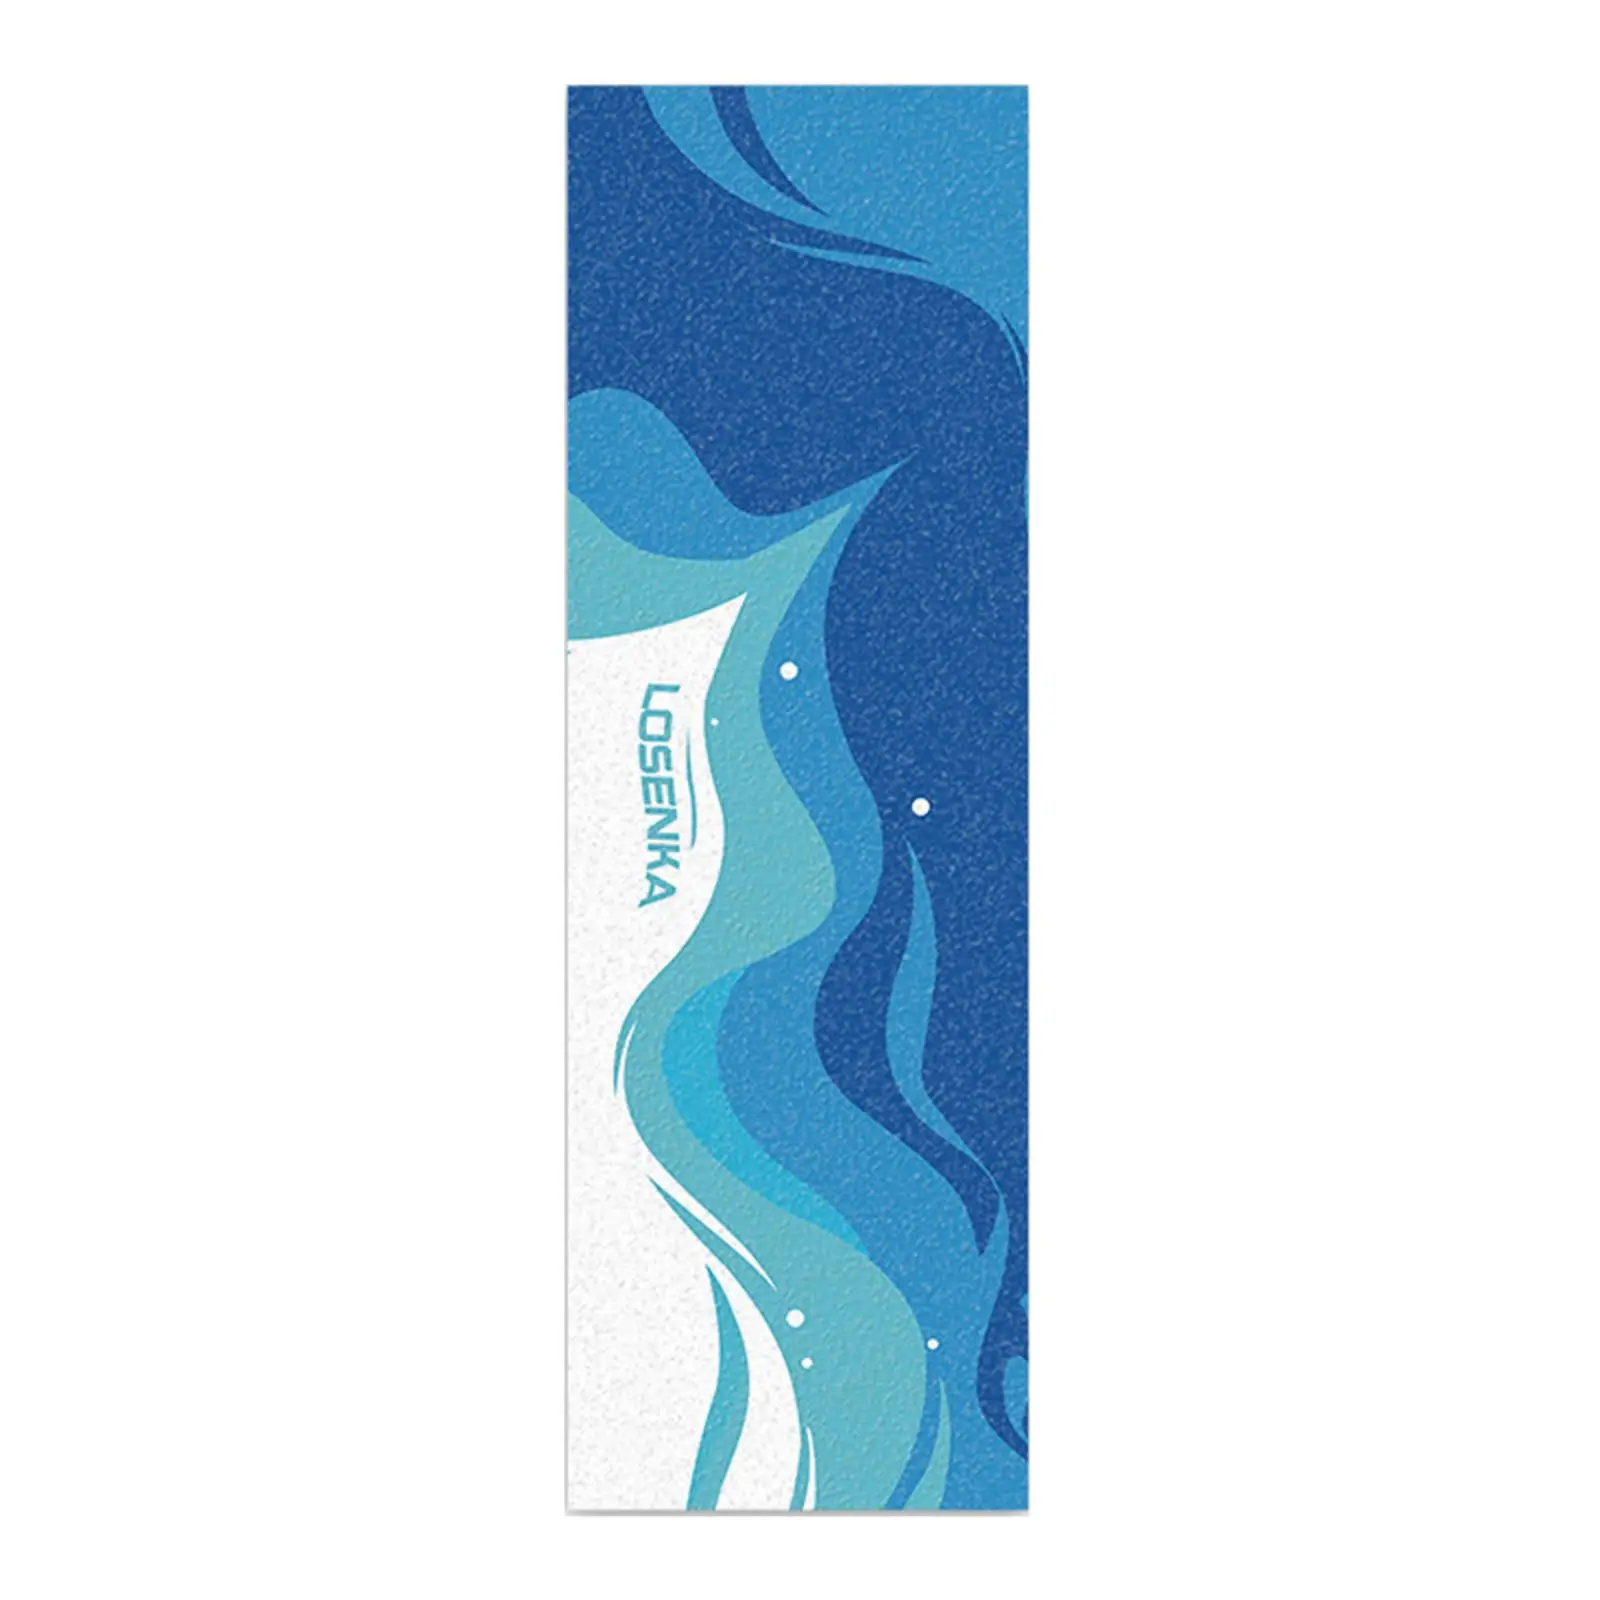 Skateboard Sandpaper Waterproof Protector Sheets Guard Longboard Tape Grip